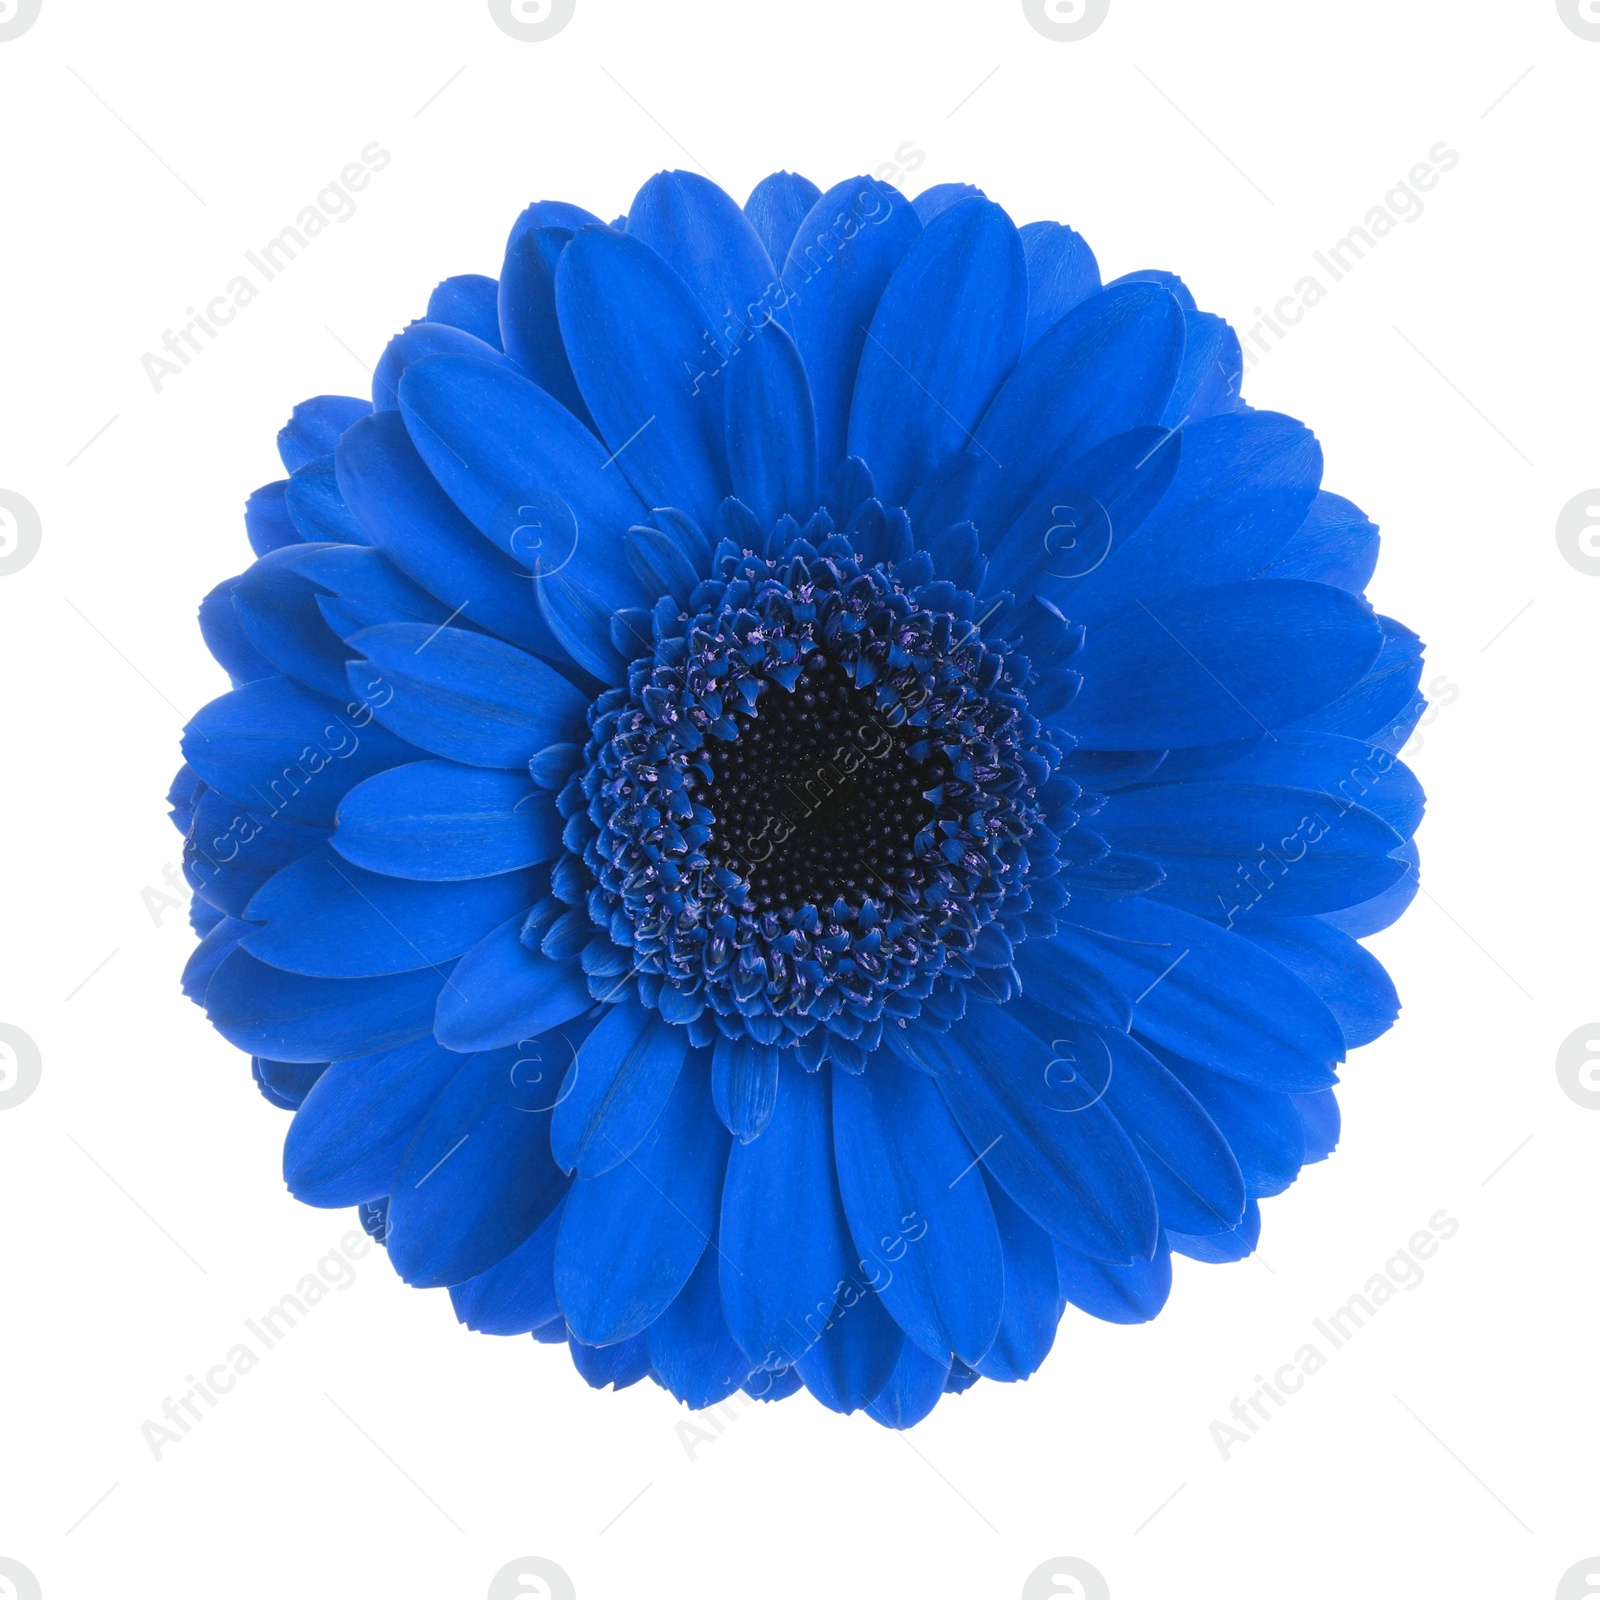 Image of Beautiful blue gerbera flower on white background